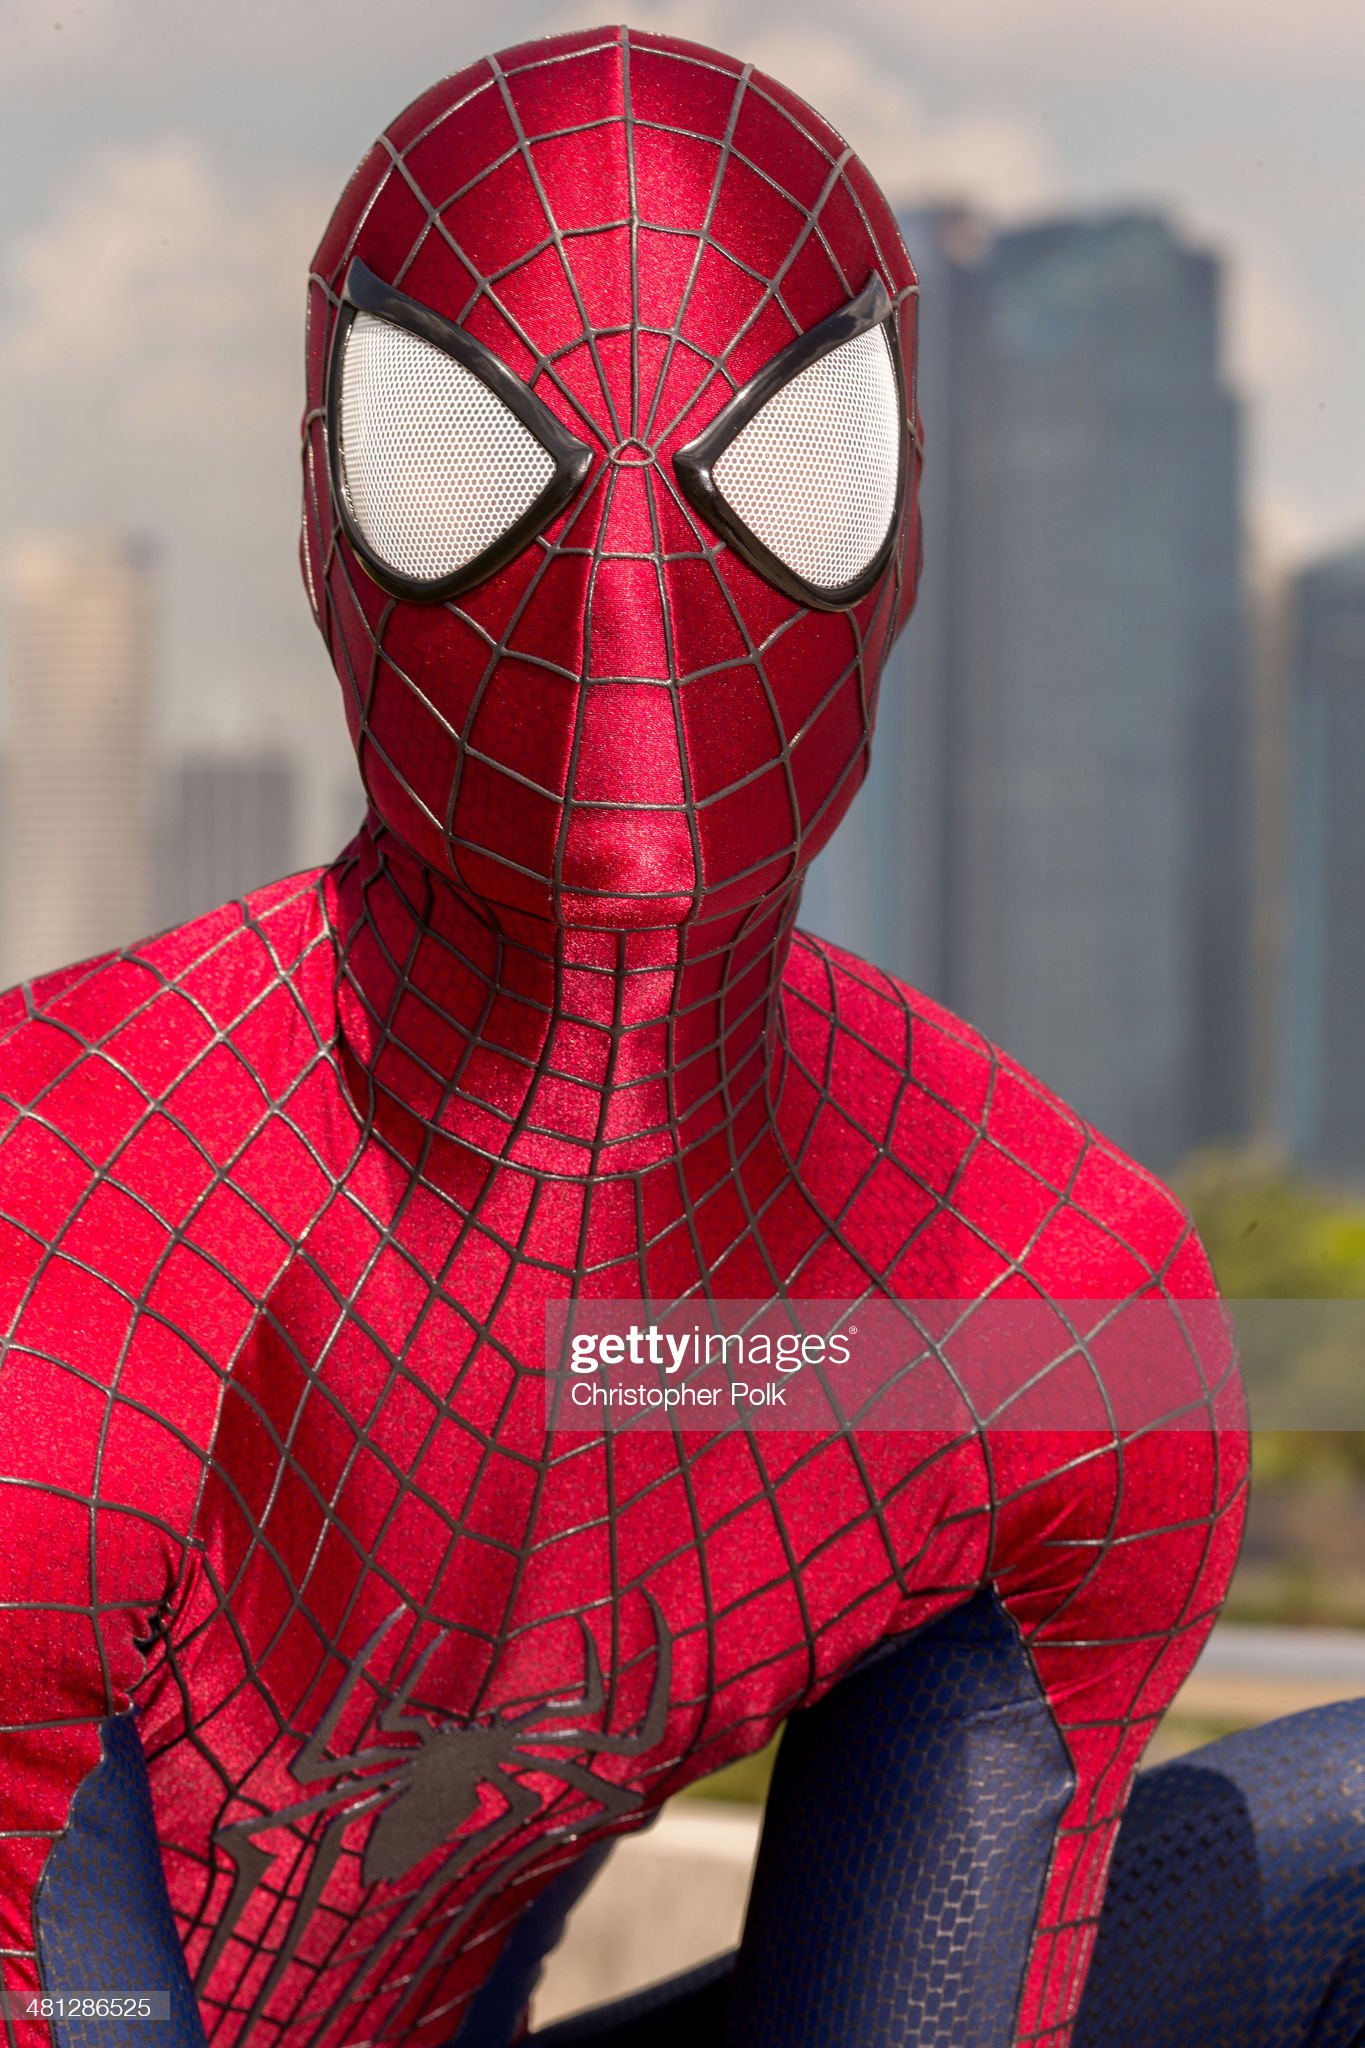 The amazing Spider-Man 2 Replica suit | RPF Costume and Prop Maker Community